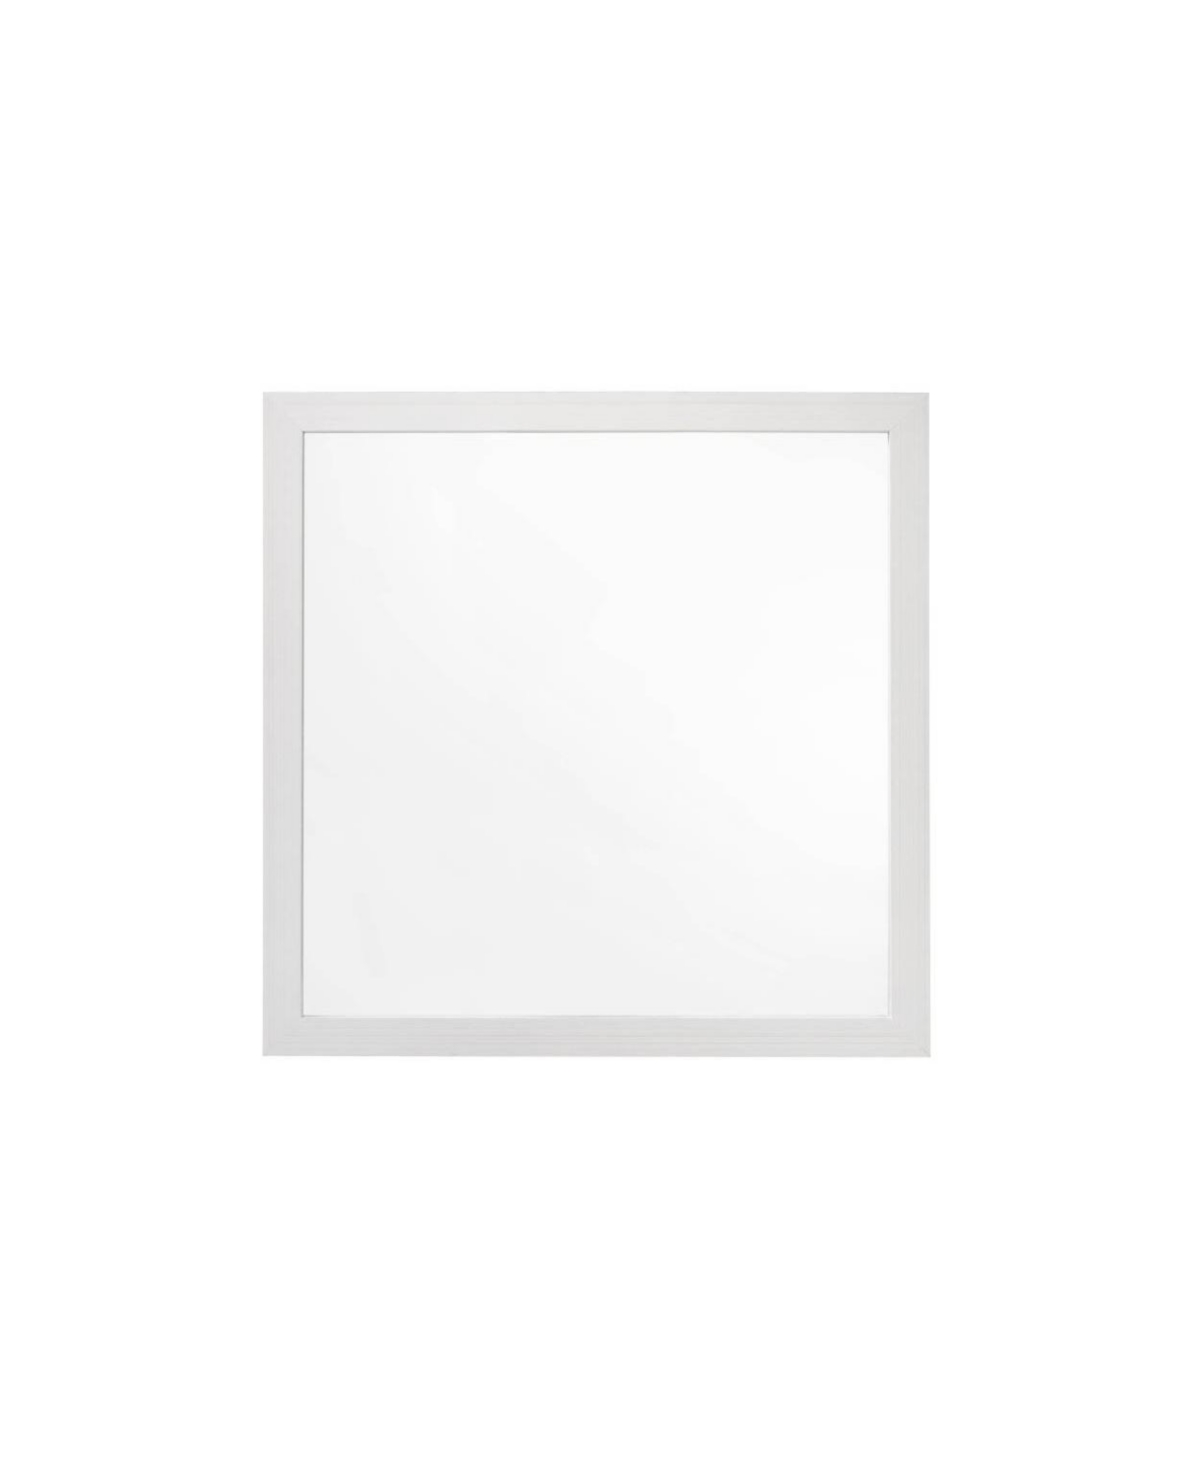 Casilda Mirror In White Finish - White